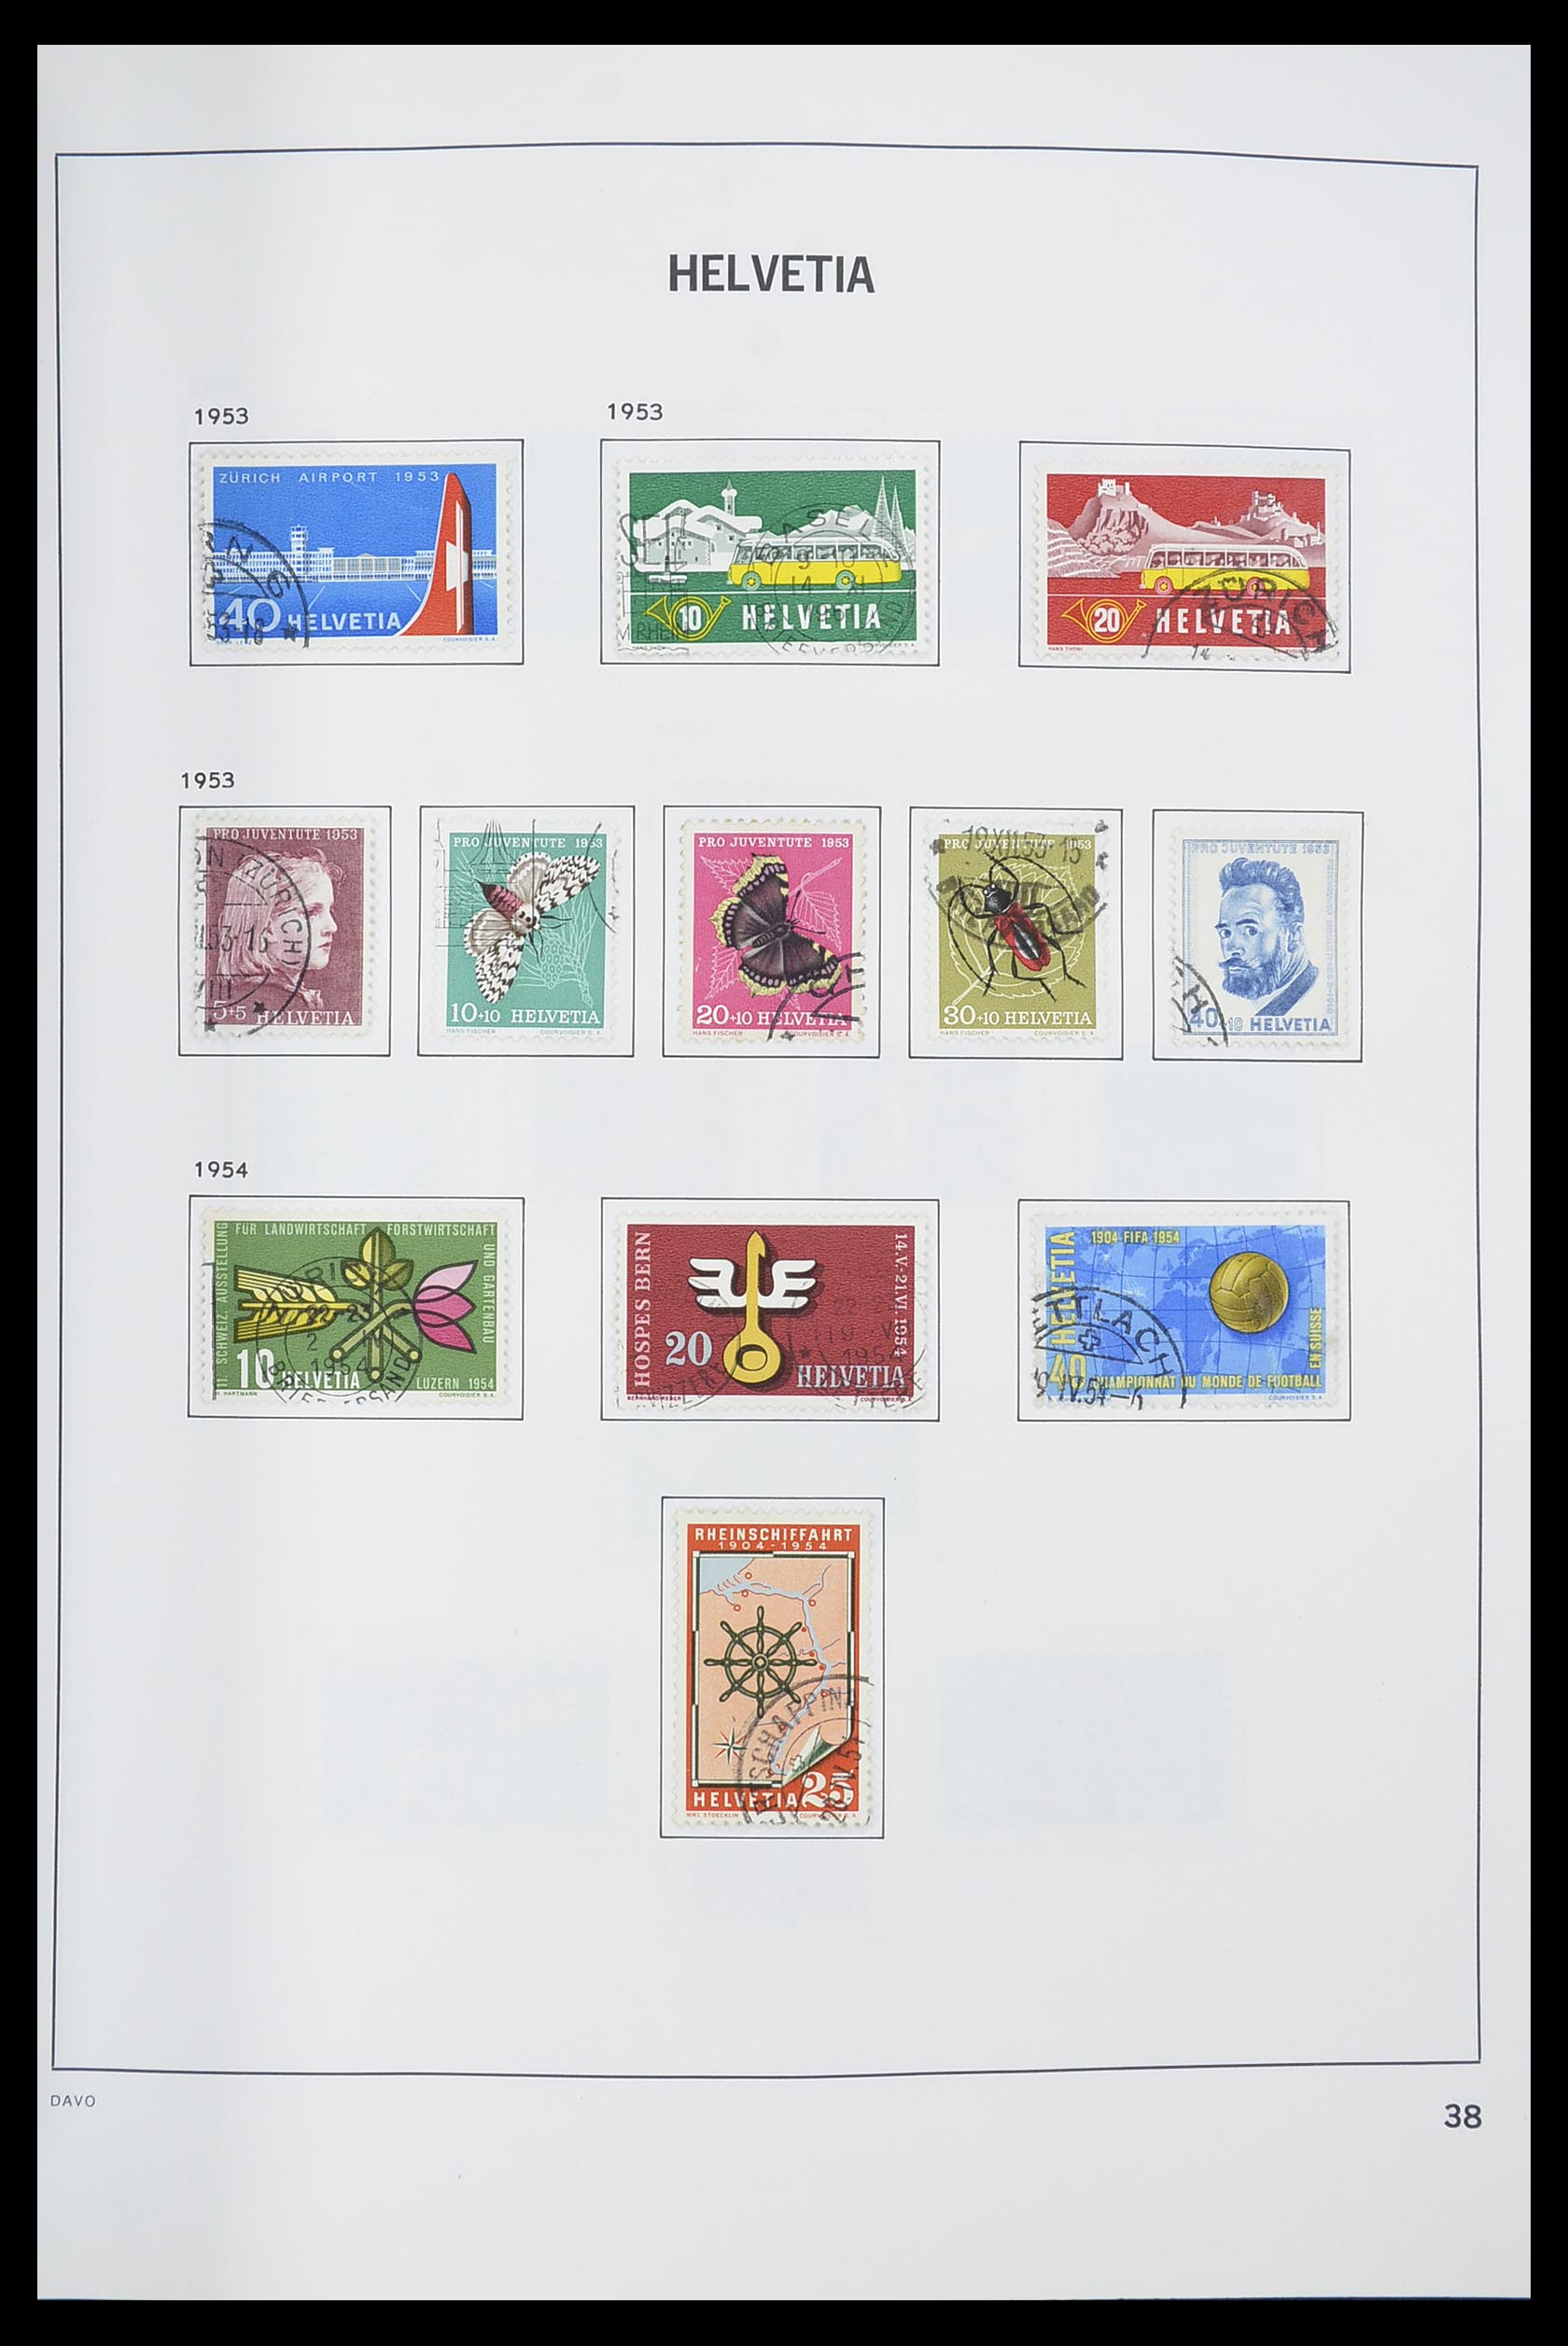 33559 039 - Stamp collection 33559 Switzerland 1850-2000.